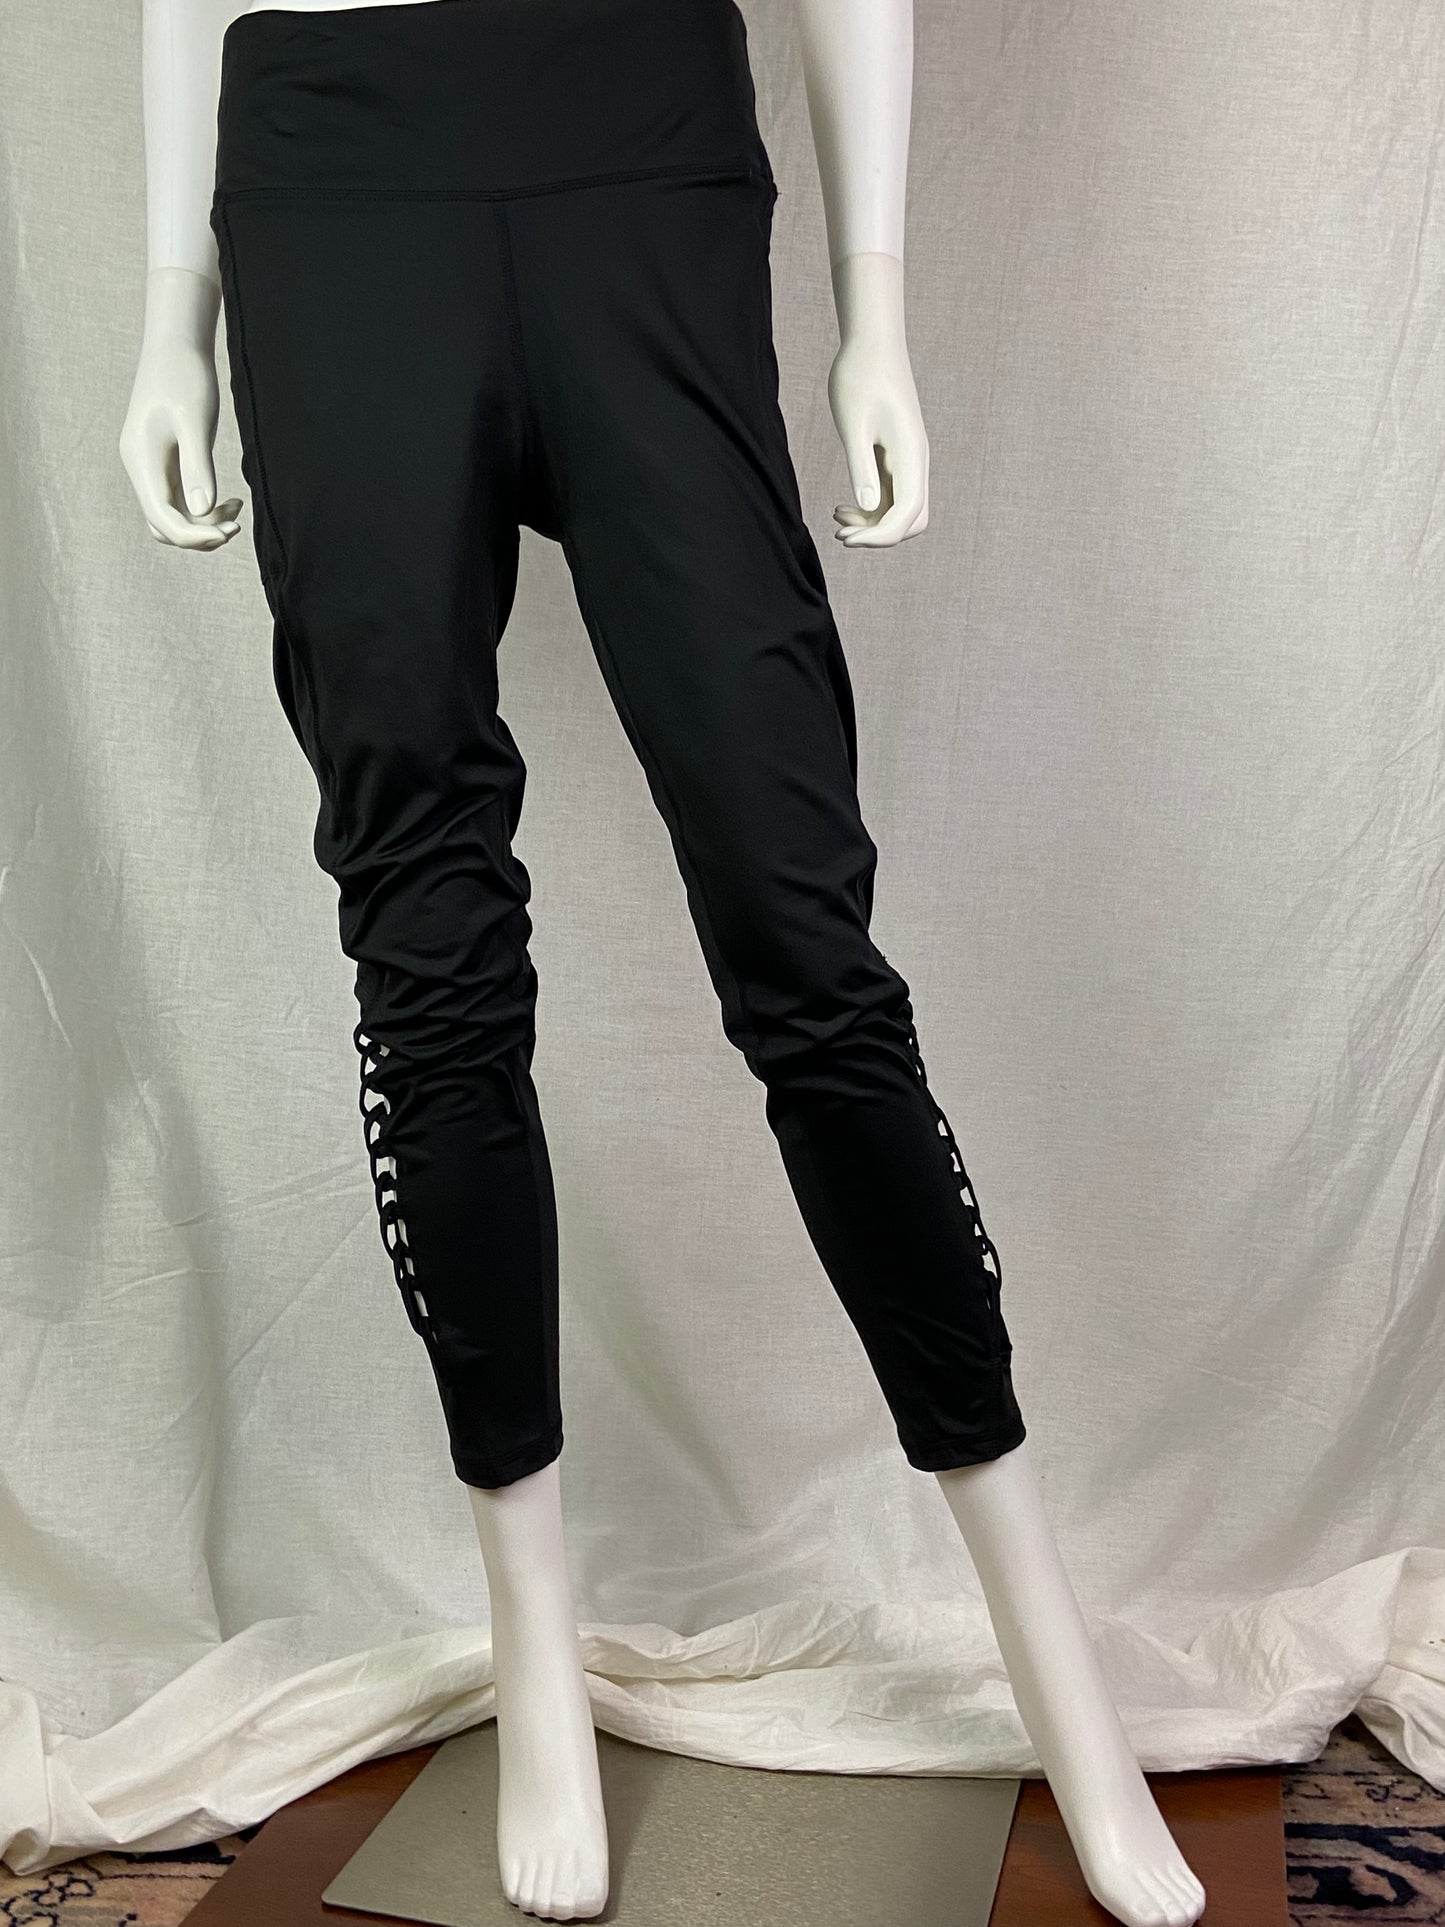 Zone Pro Black Stretch Cut Out Lace Leggings Pants